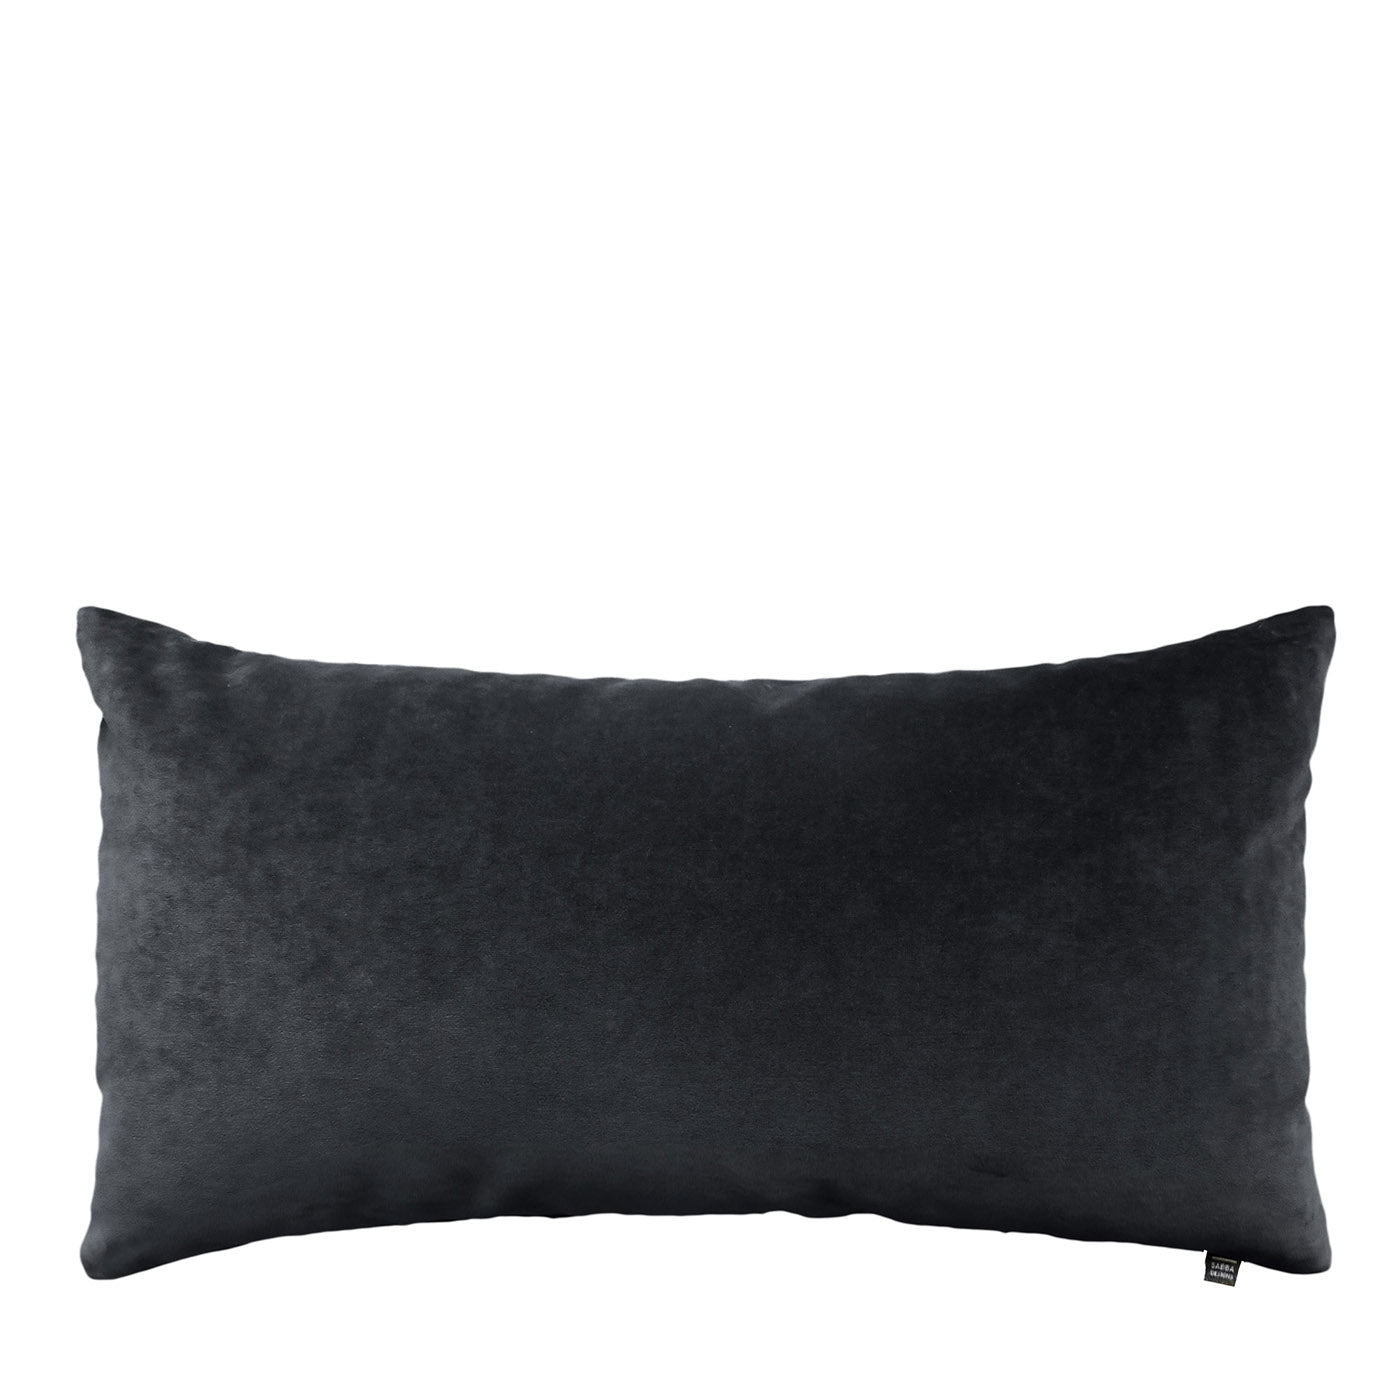 Black Velvet Lumbar Cushion Cover - Main view